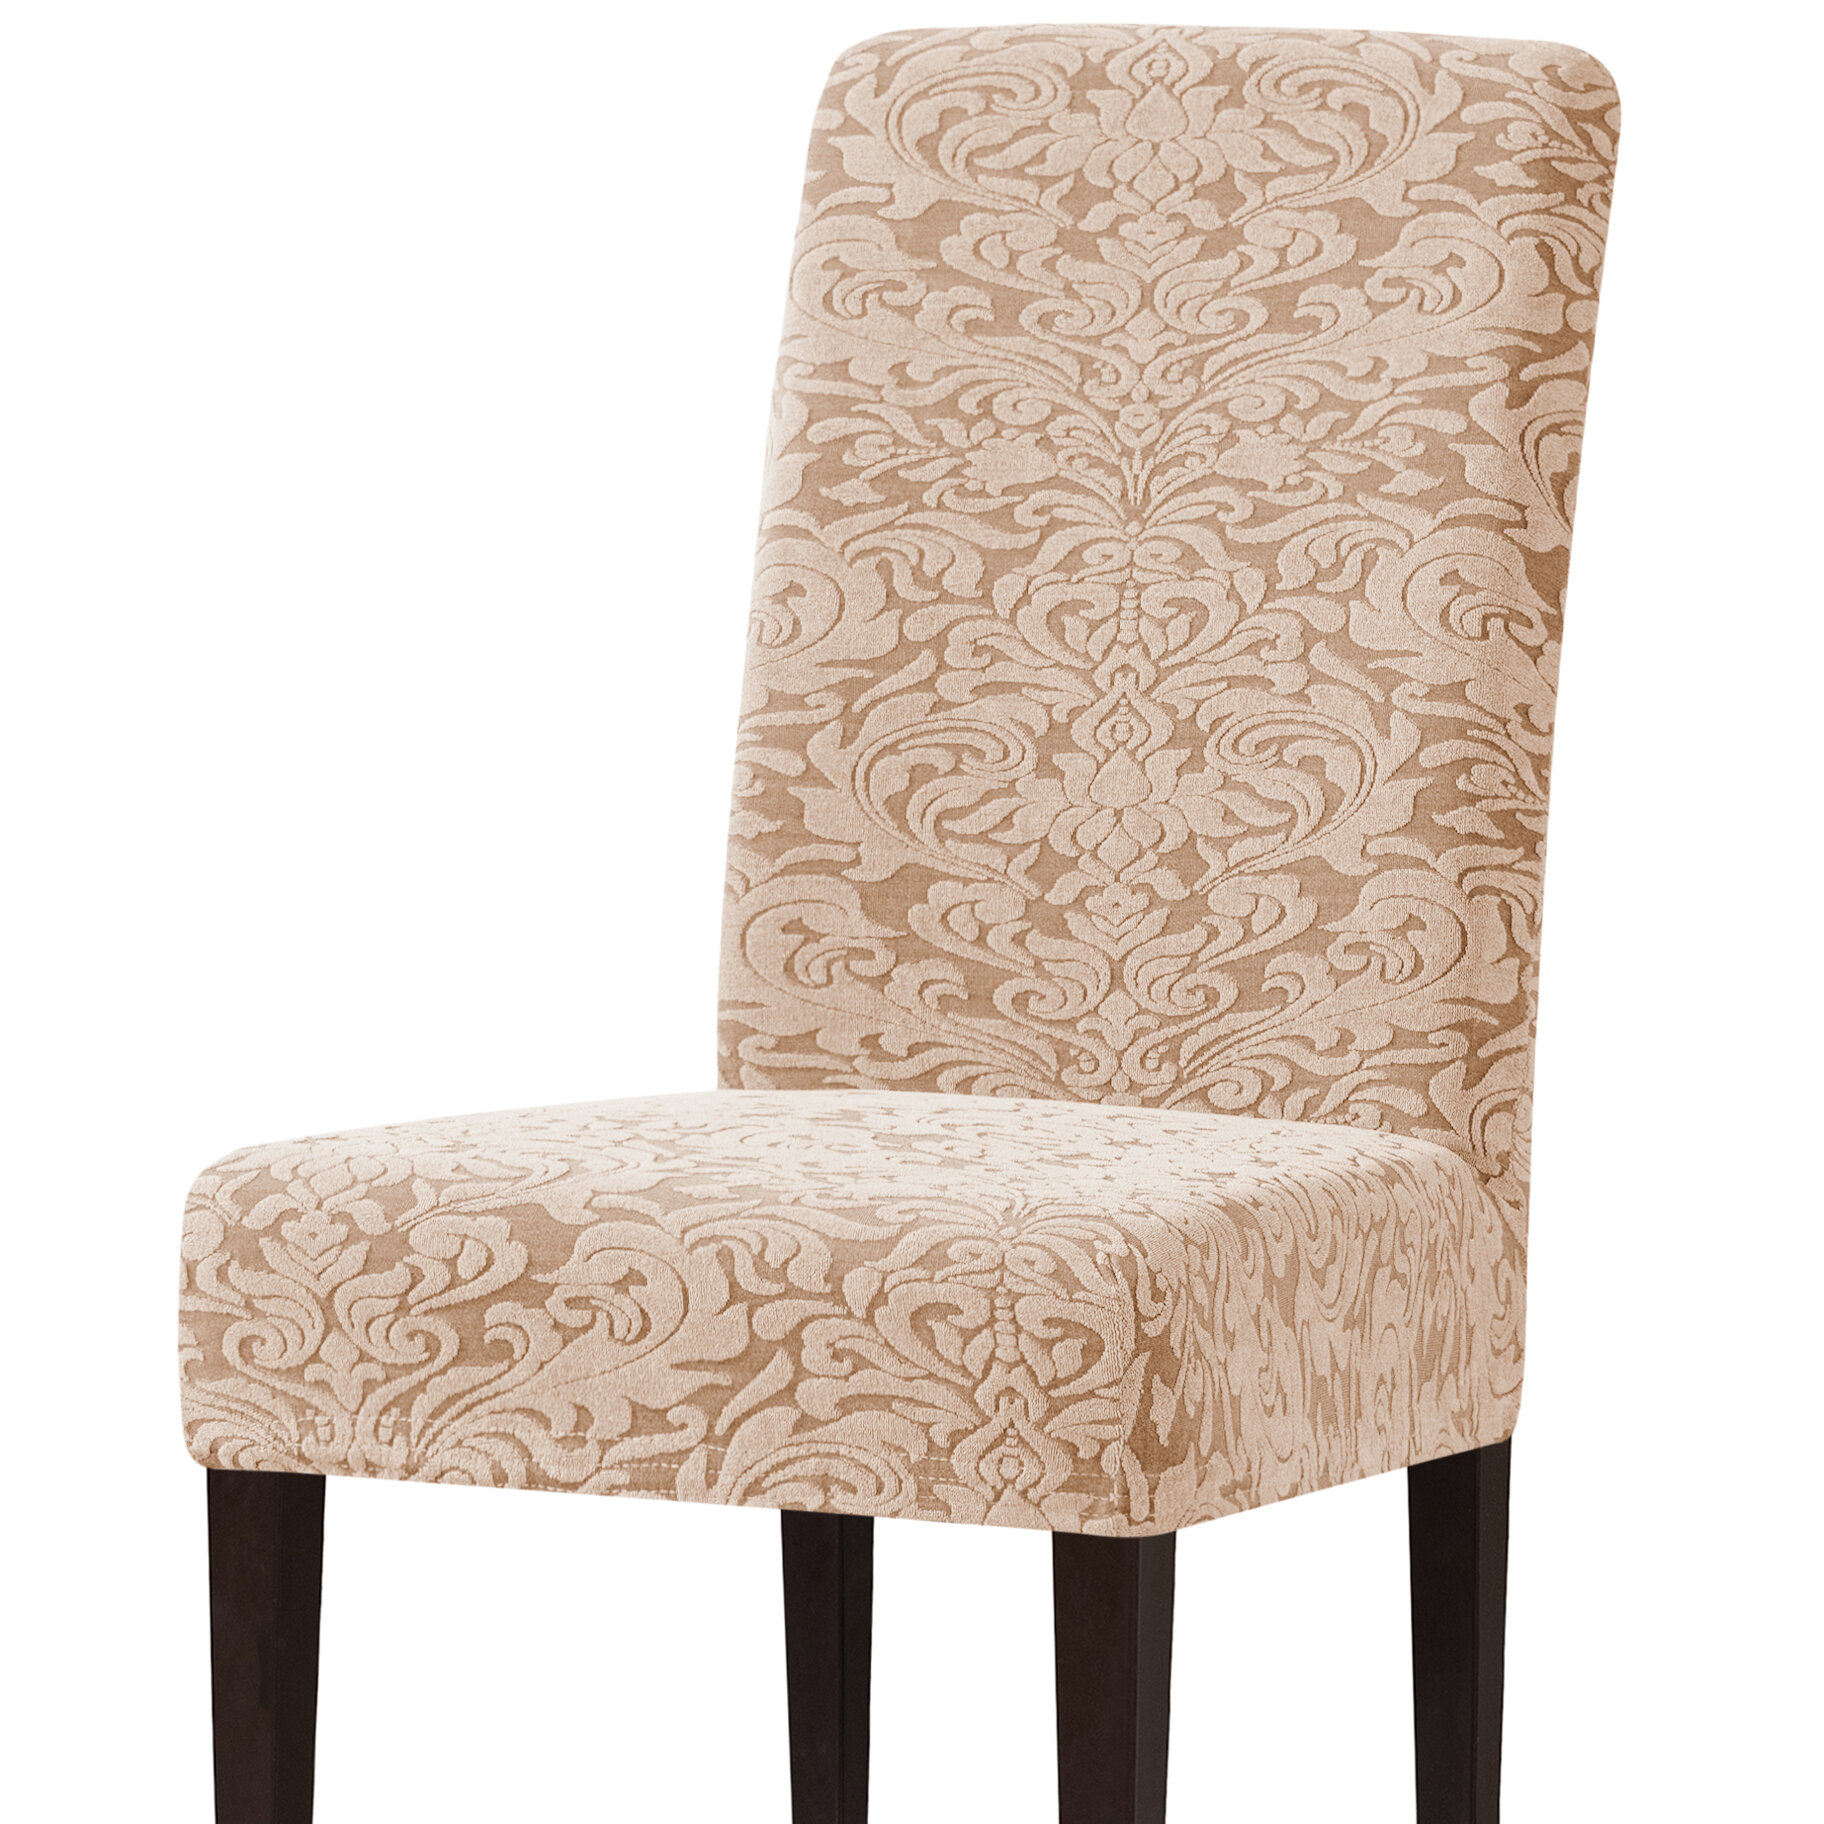 Subrtex Damask Printed Soft Stretchy Box Cushion Dining Chair Slipcover Wayfair Co Uk